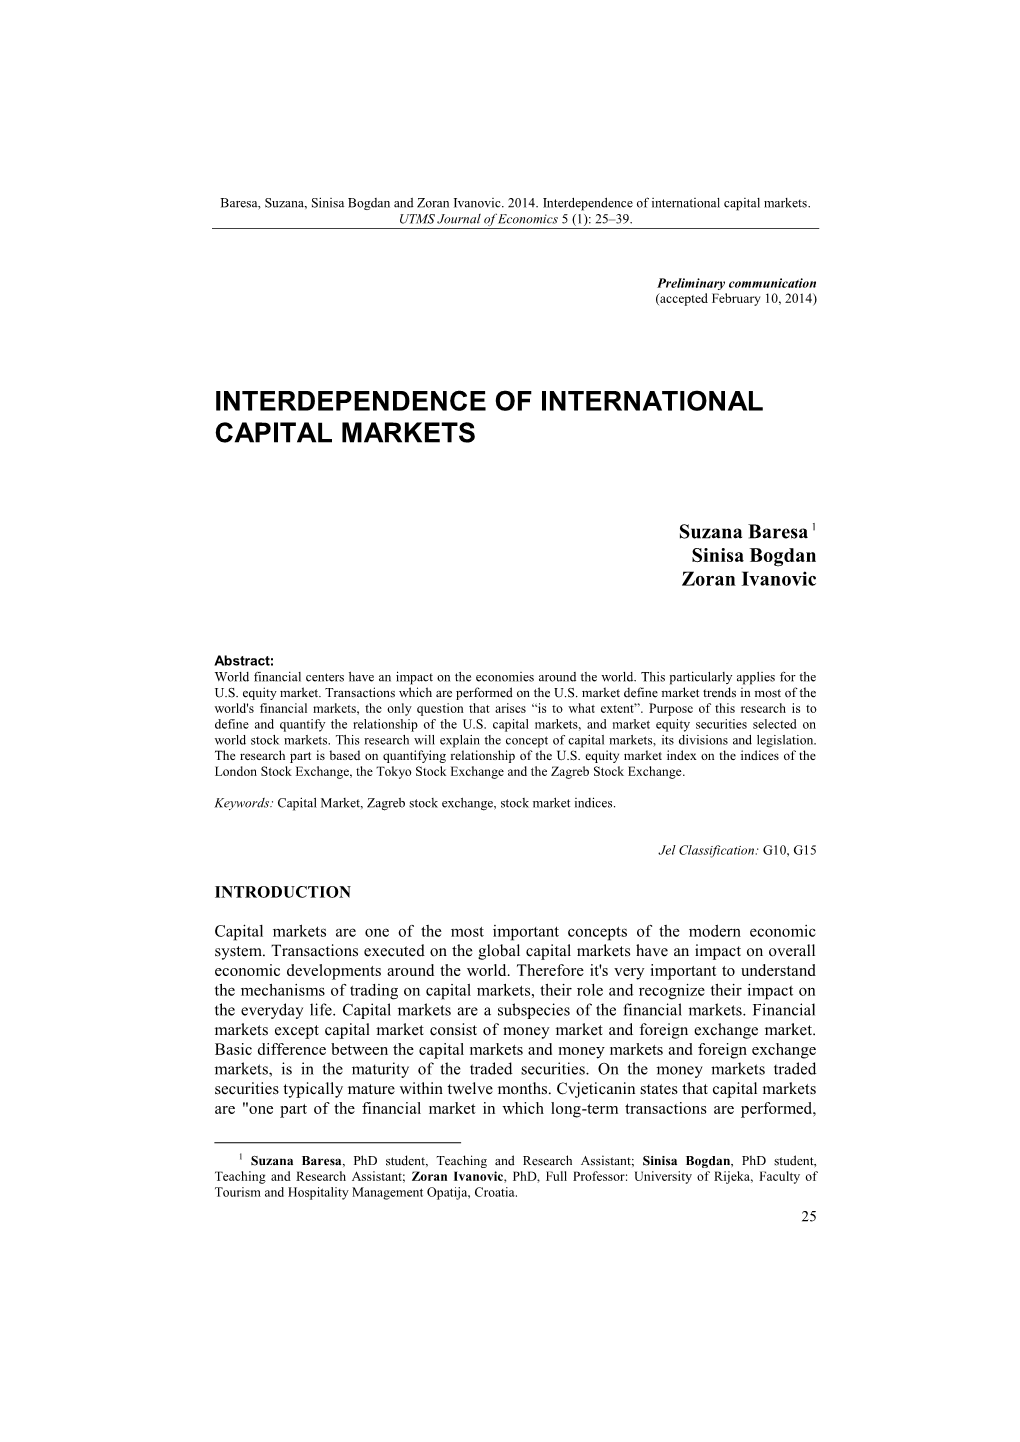 Interdependence of International Capital Markets